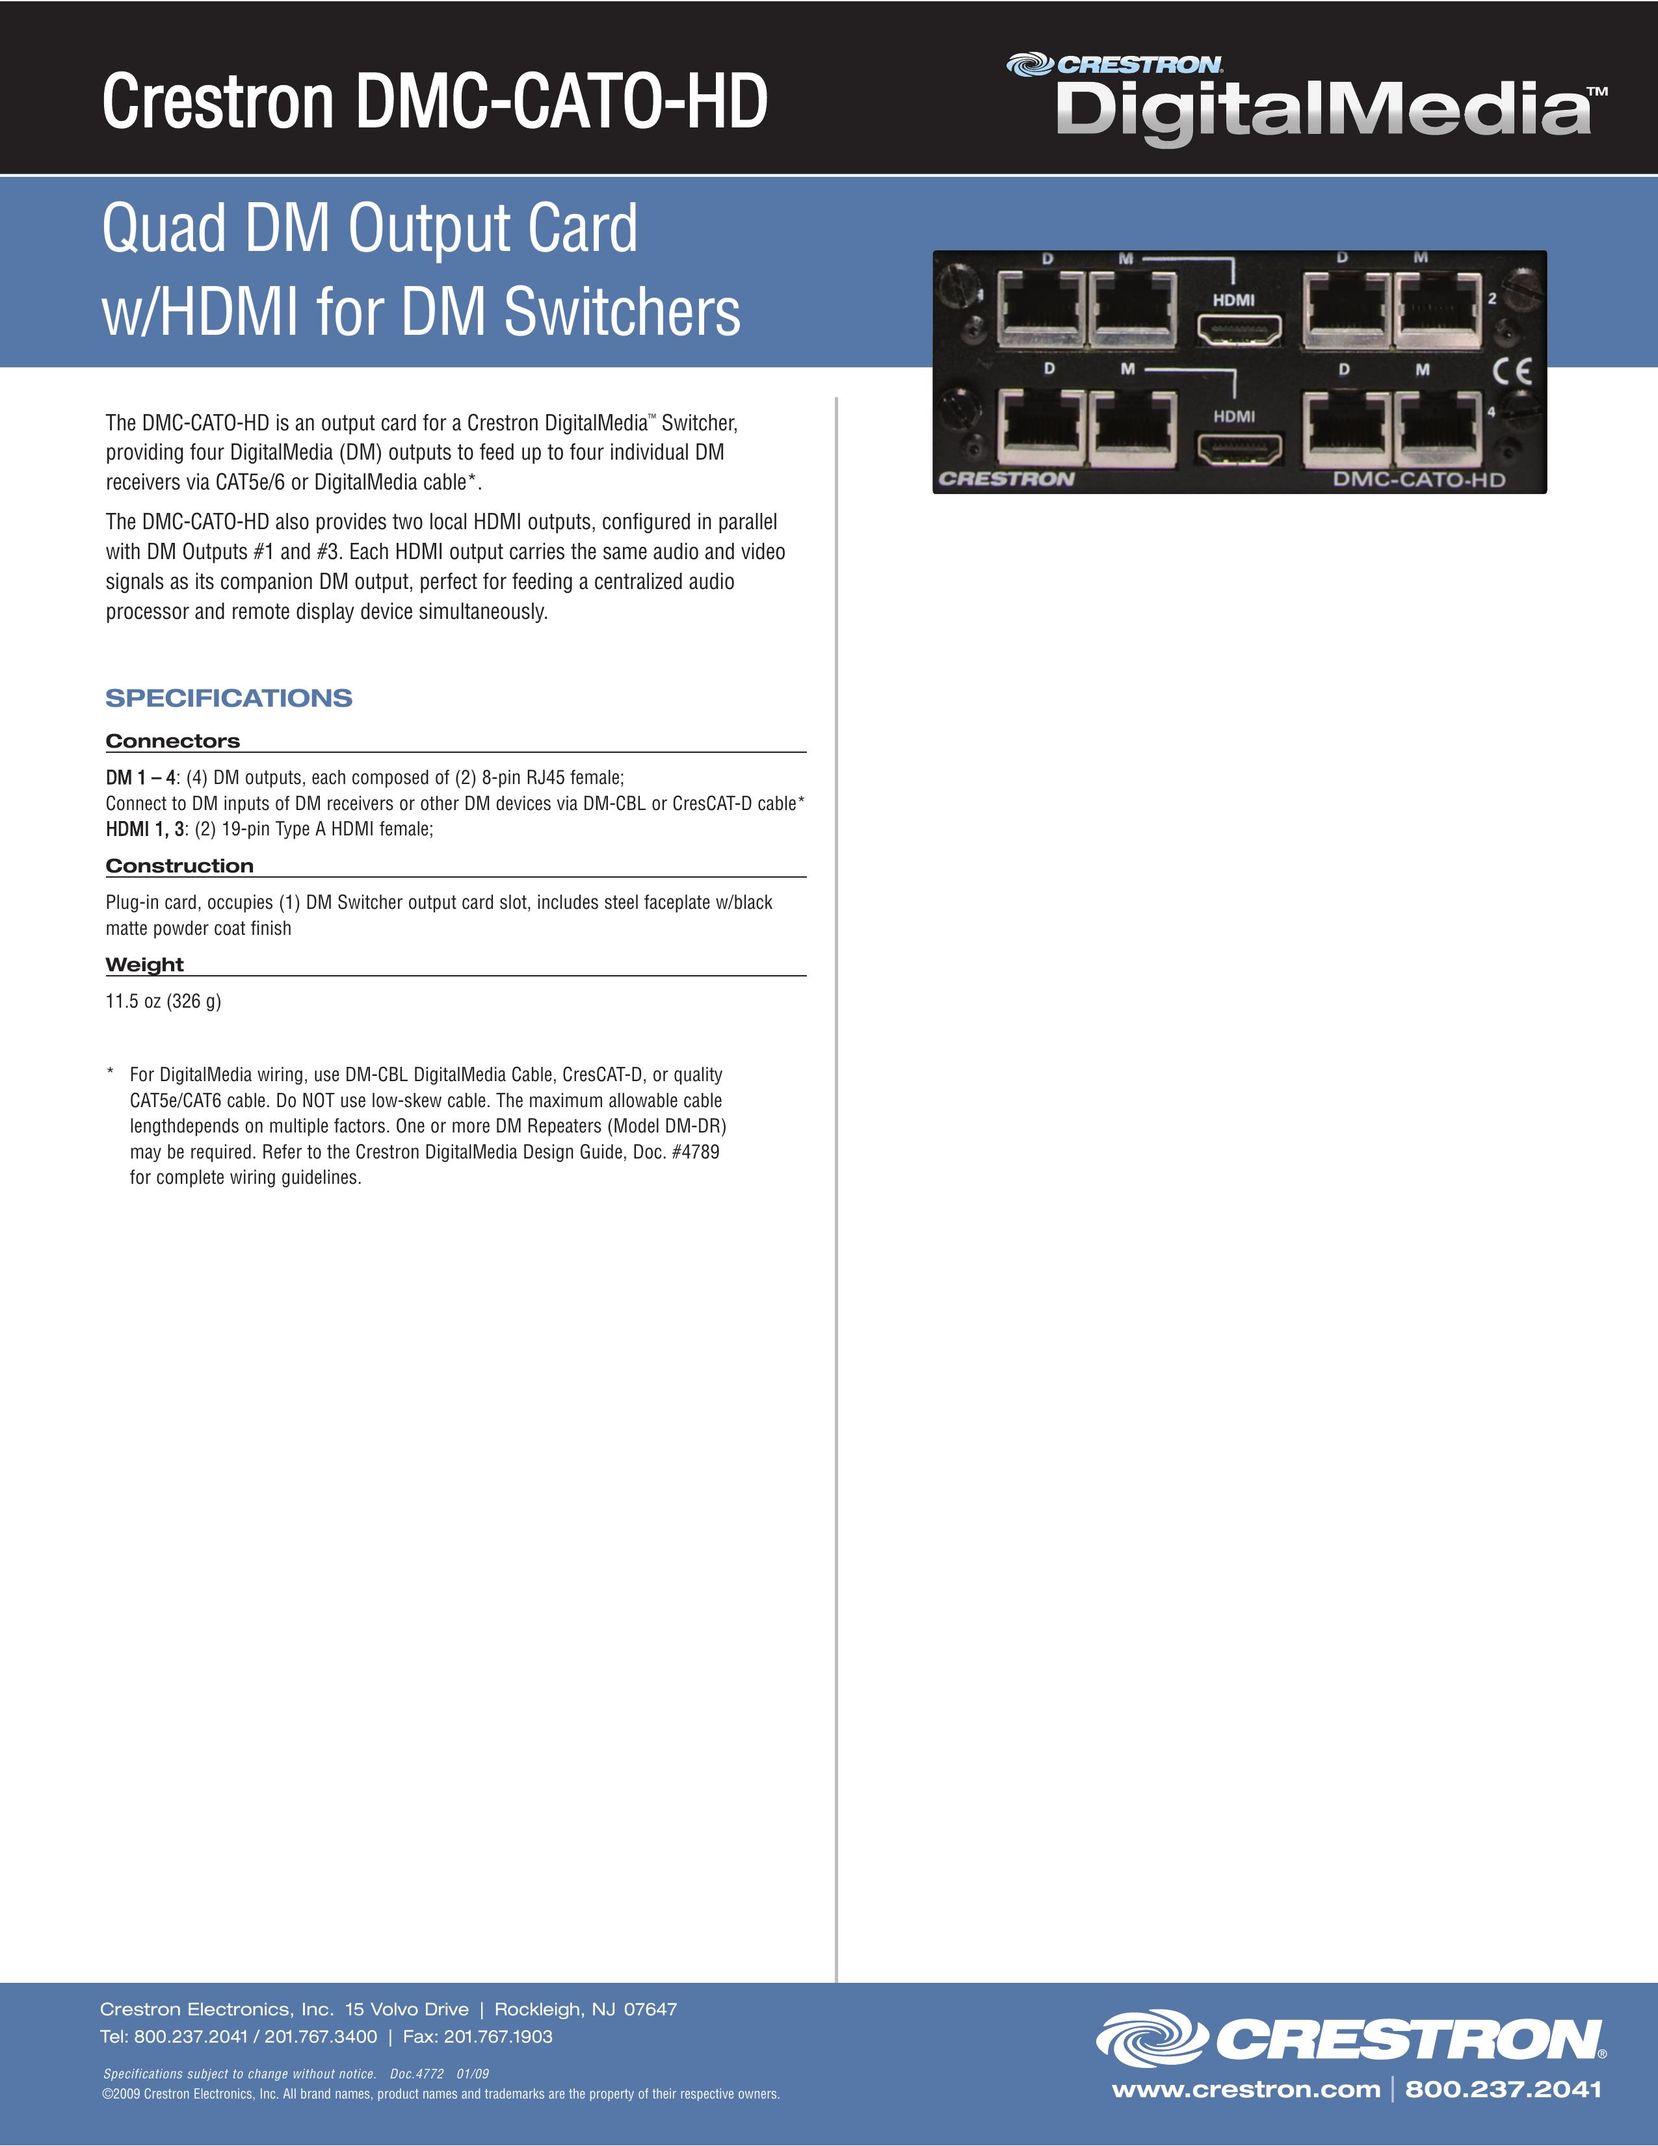 Crestron electronic DMC-CATO-HD Switch User Manual